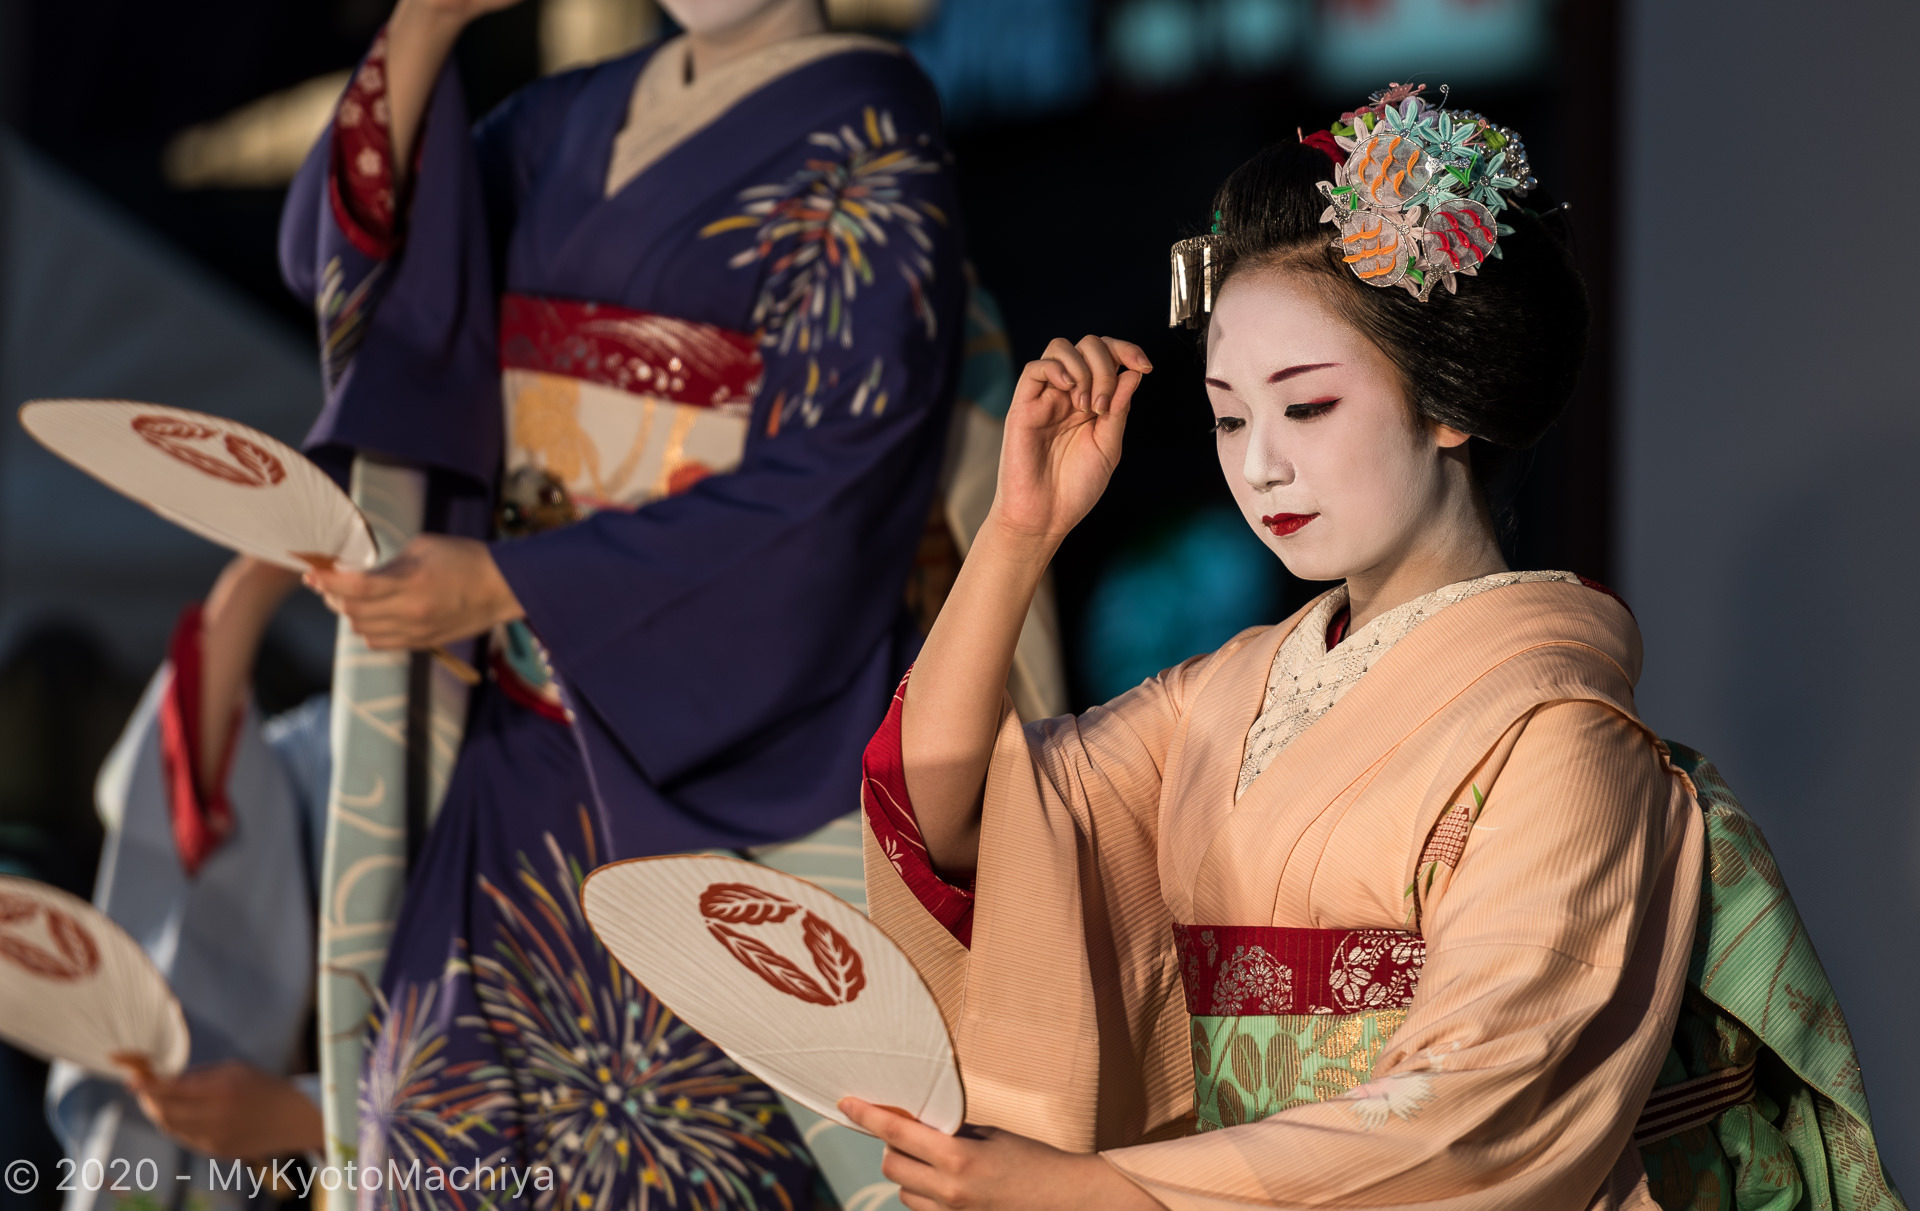 Maiko dancing at the Gion Matsuri, Kyoto